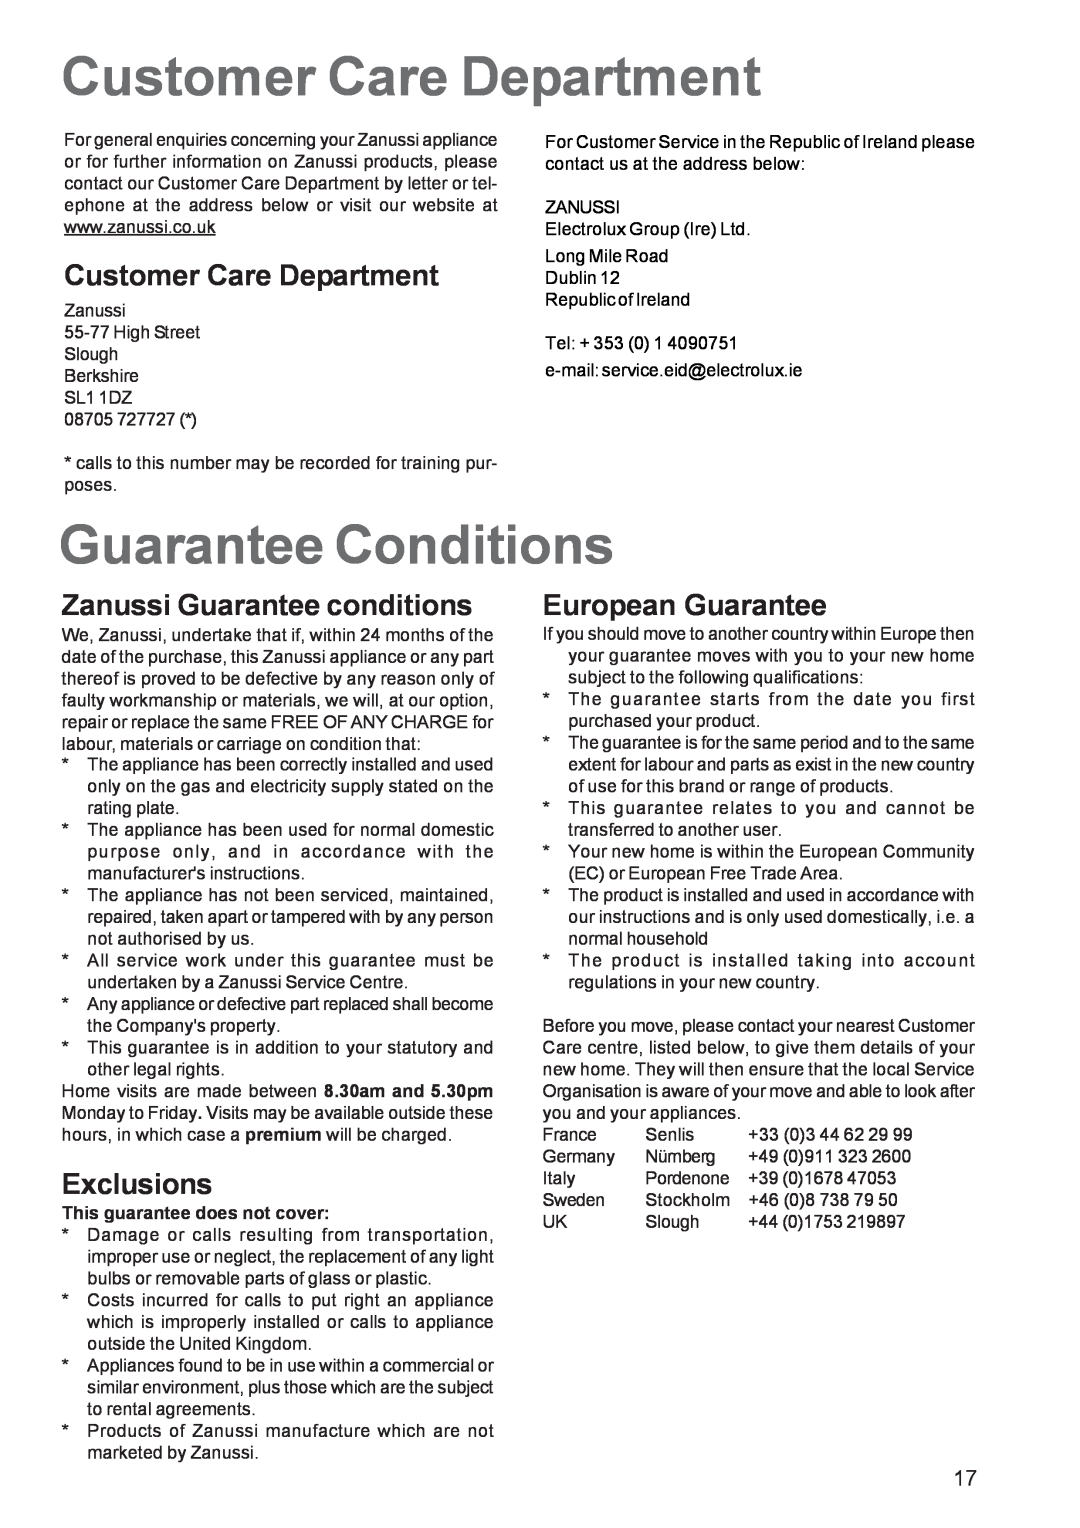 Zanussi ZBF 361 manual Customer Care Department, Guarantee Conditions, Zanussi Guarantee conditions, Exclusions 